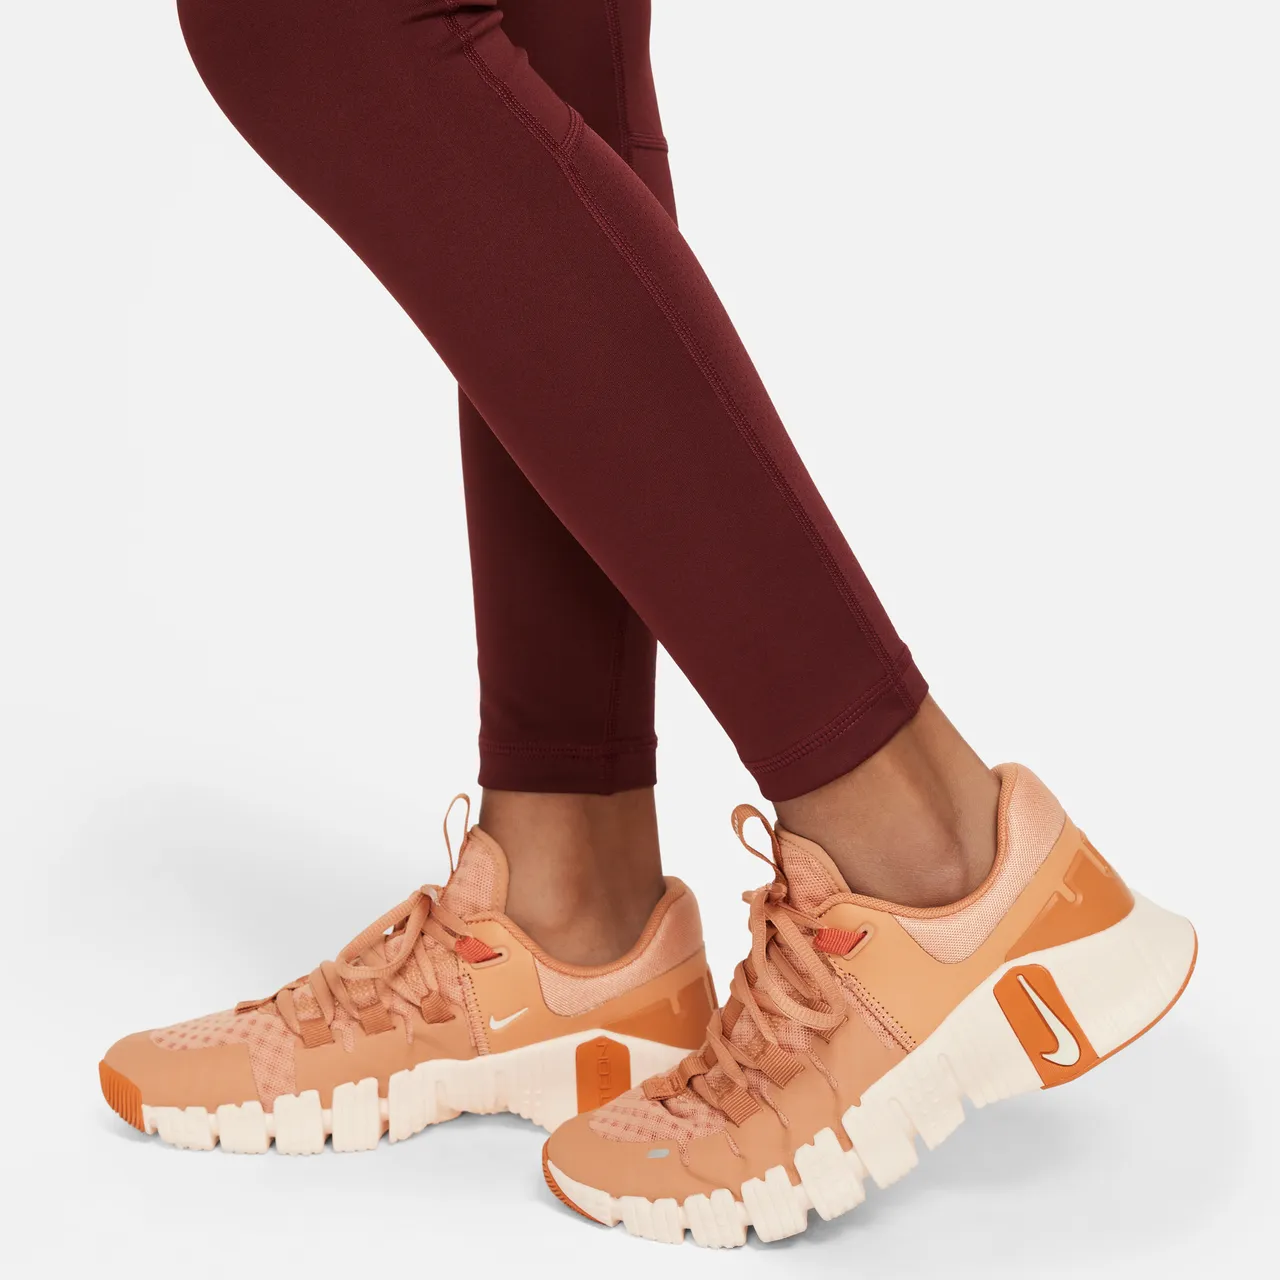 Nike Pro Girls' Dri-FIT Leggings - Red - Polyester